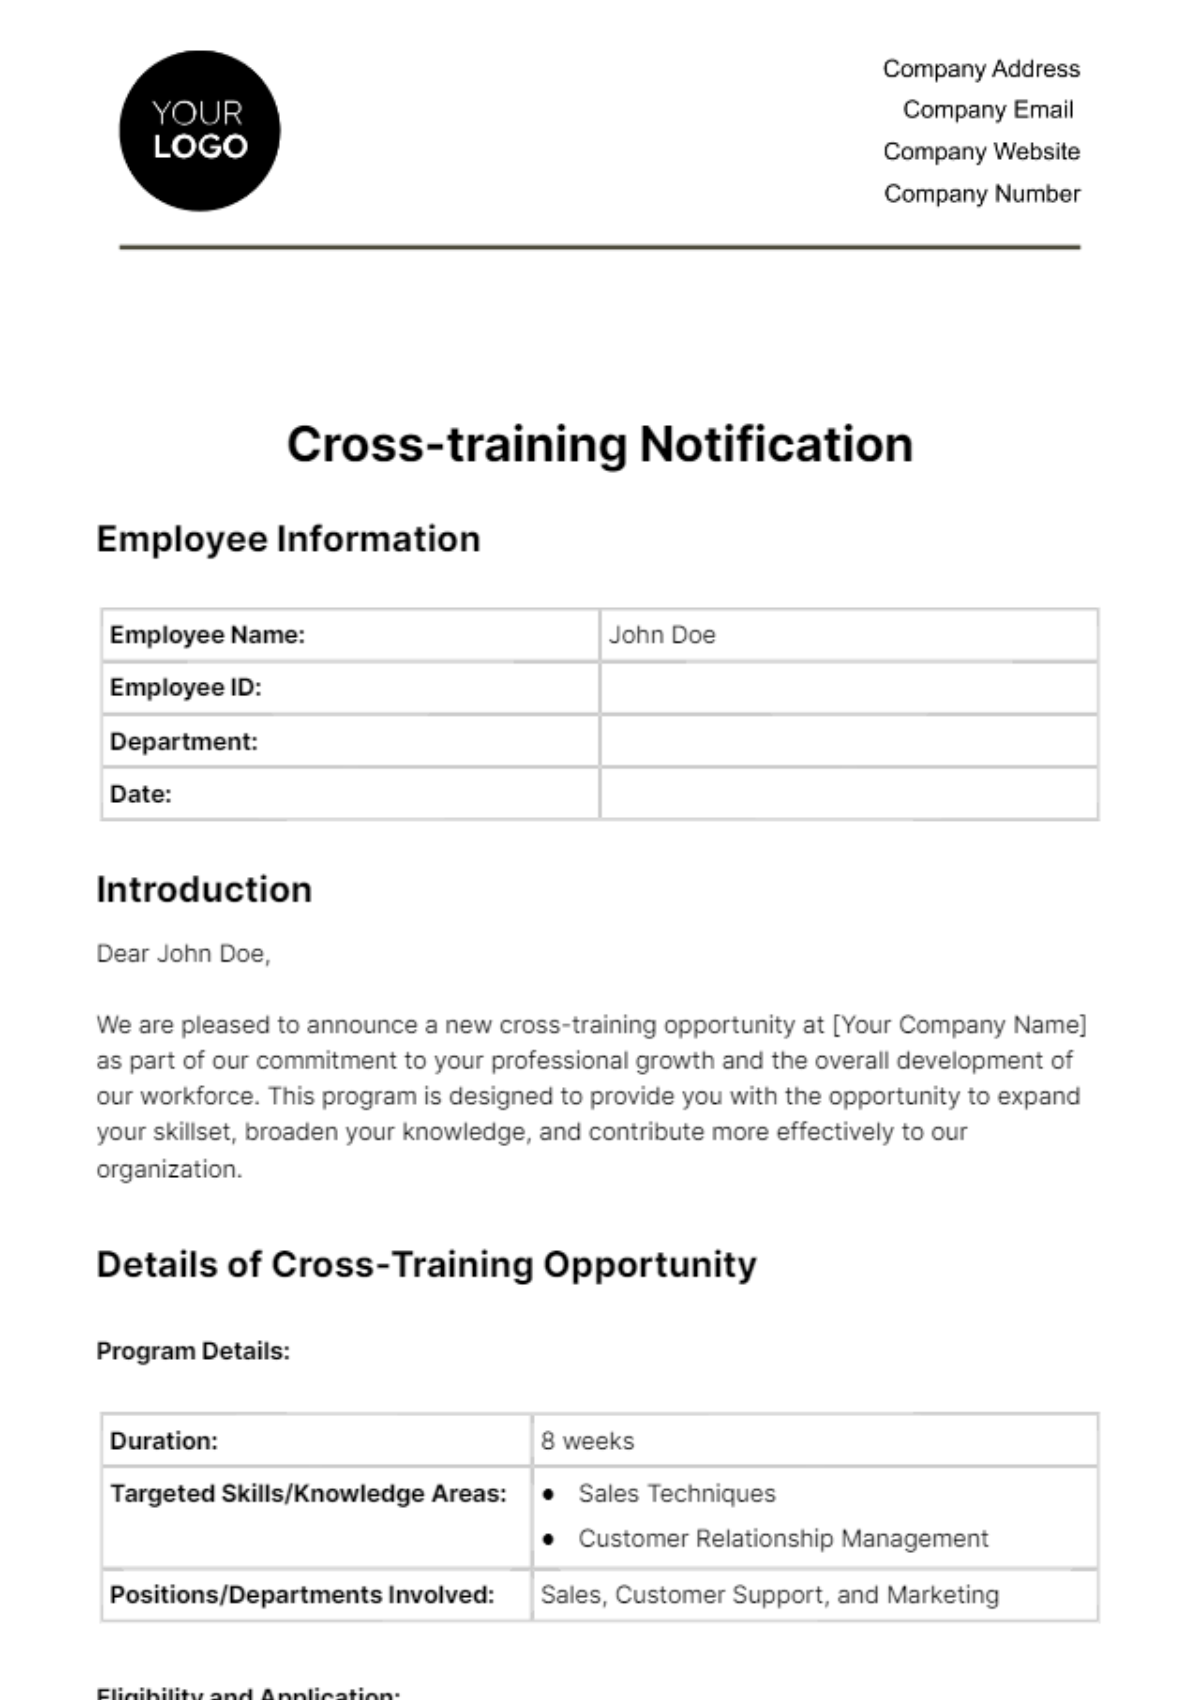 Cross-training Notification HR Template